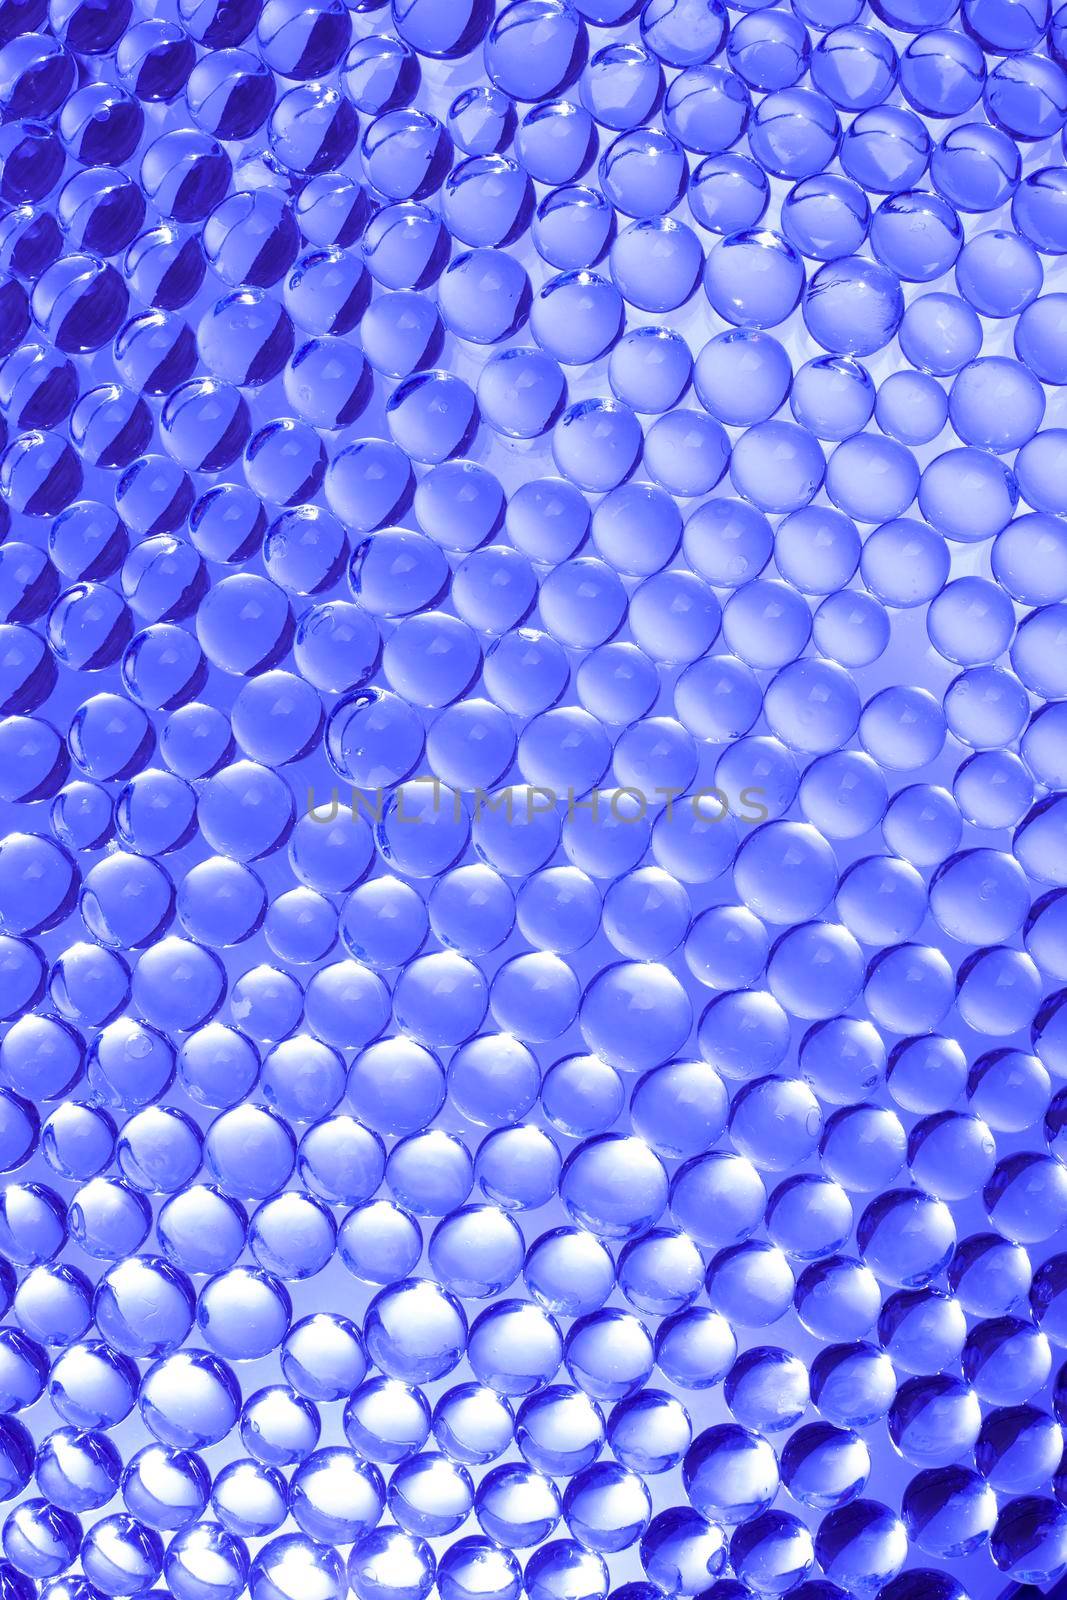 Background blue bubbles - Stock image by Jyliana